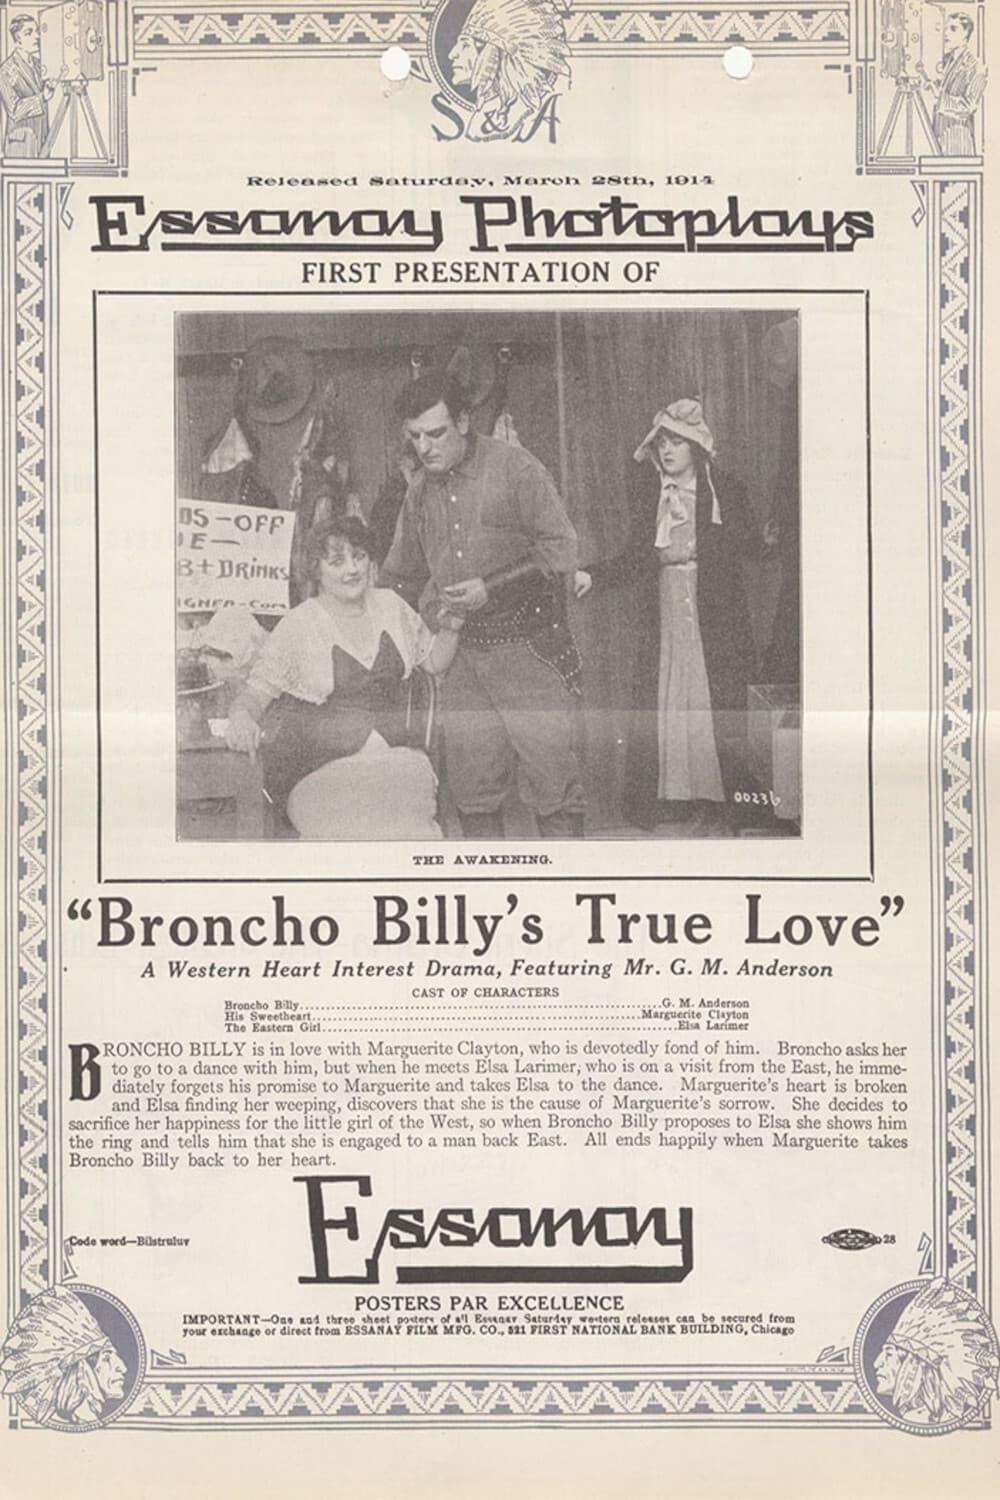 Broncho Billy's True Love poster